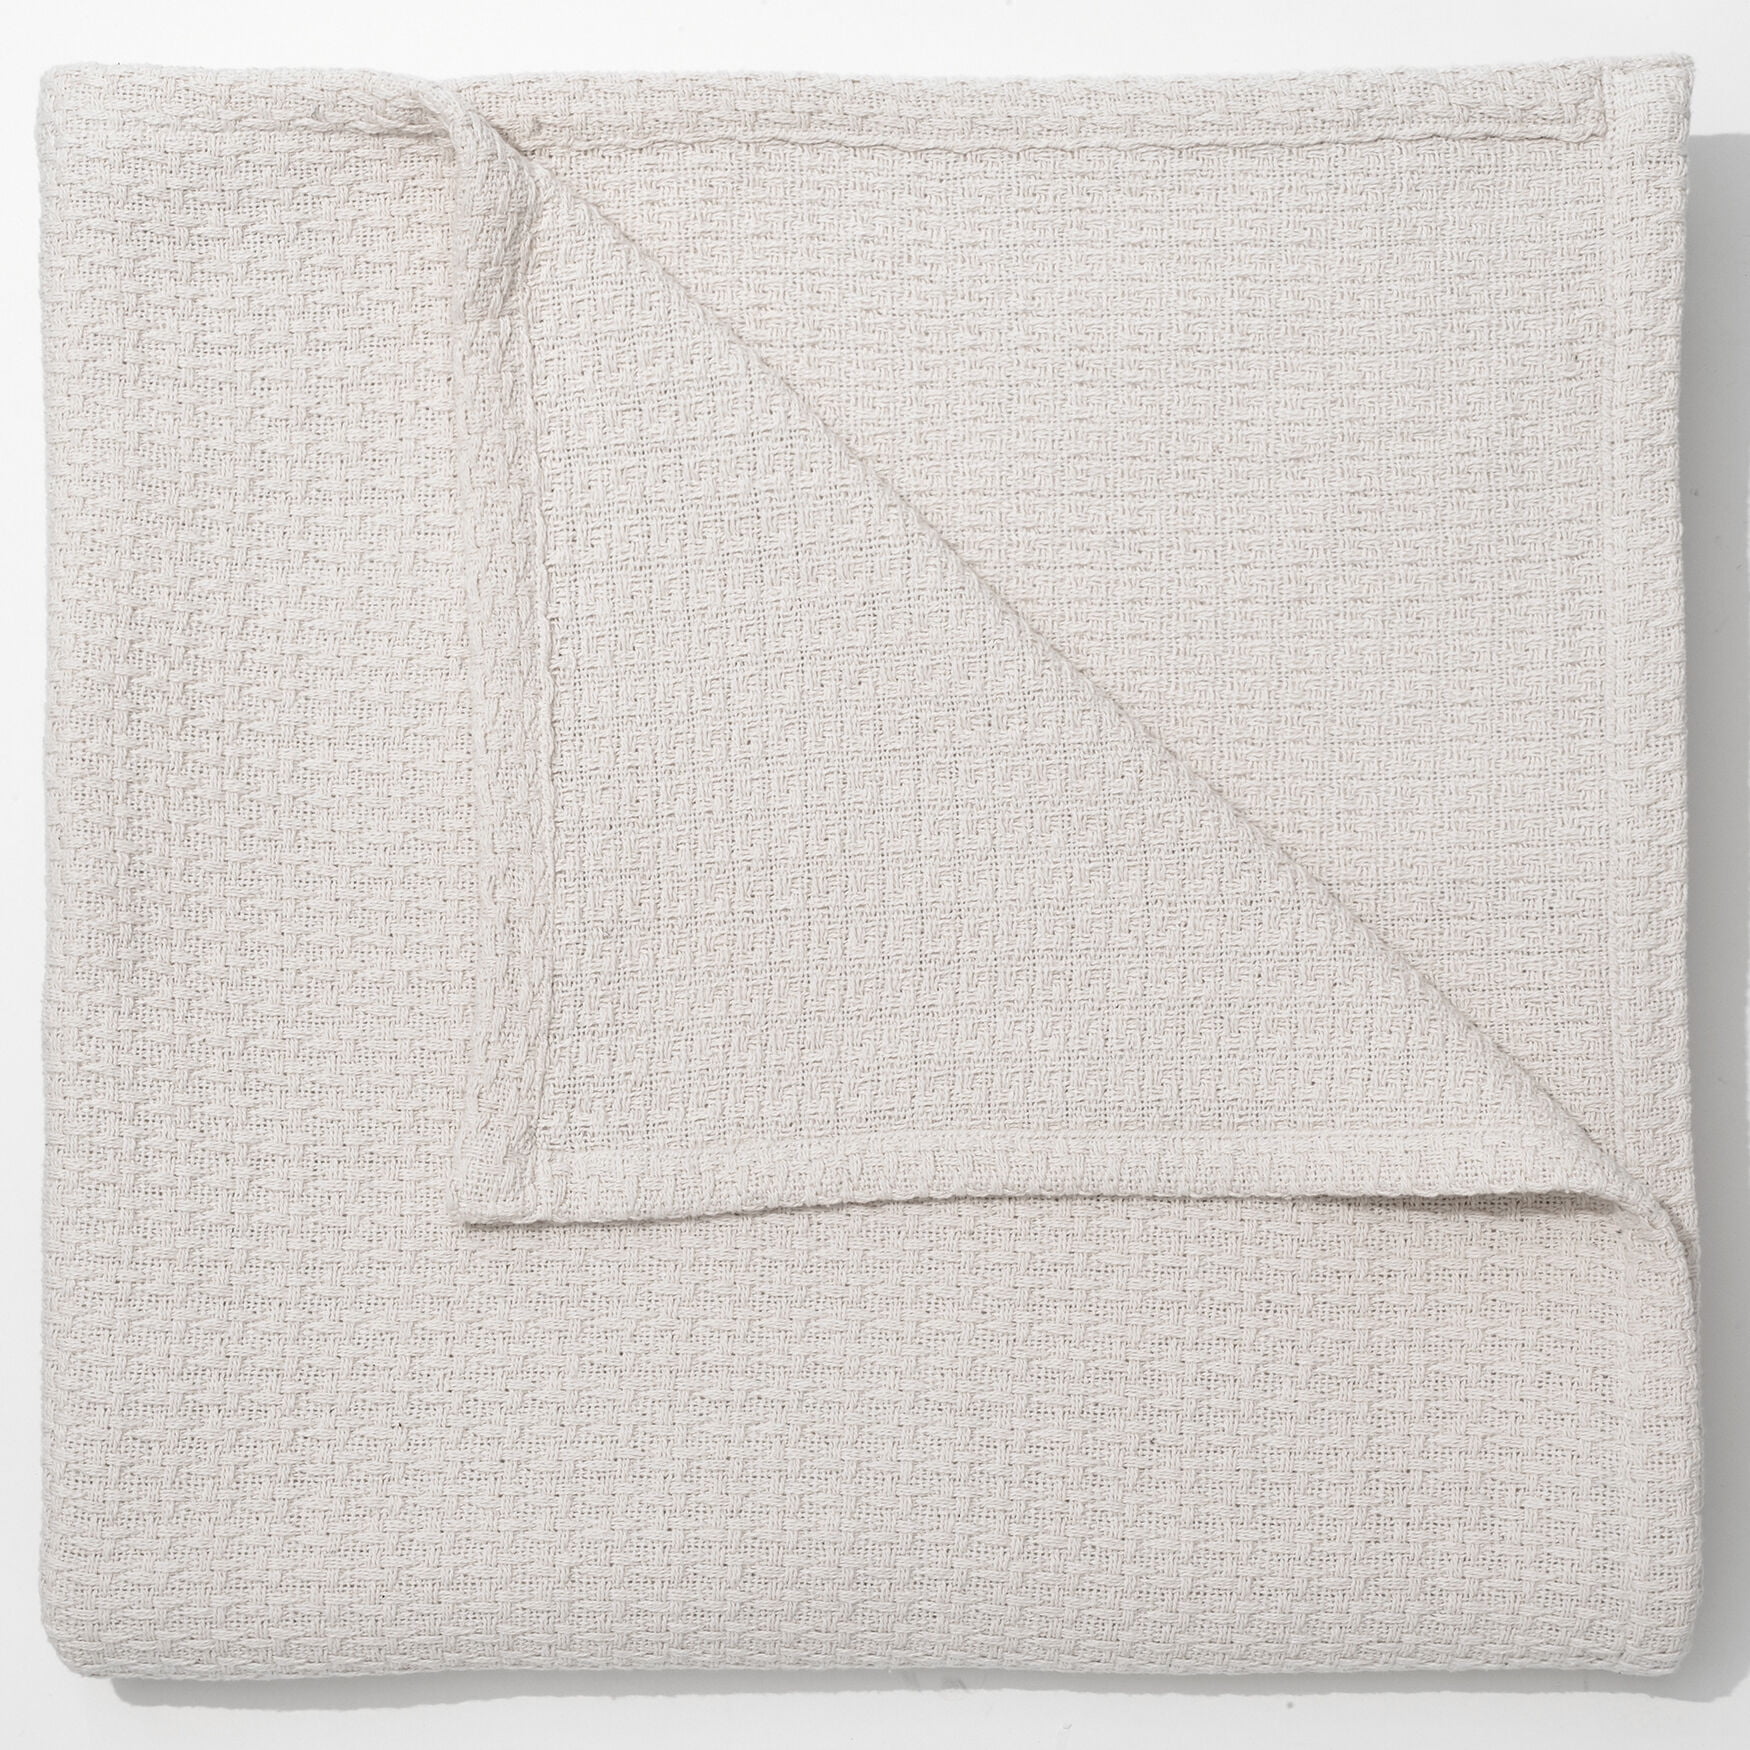 Biddeford 1004-9052106-711 Comfort Knit Fleece Electric Heated Blanket King Chocolate